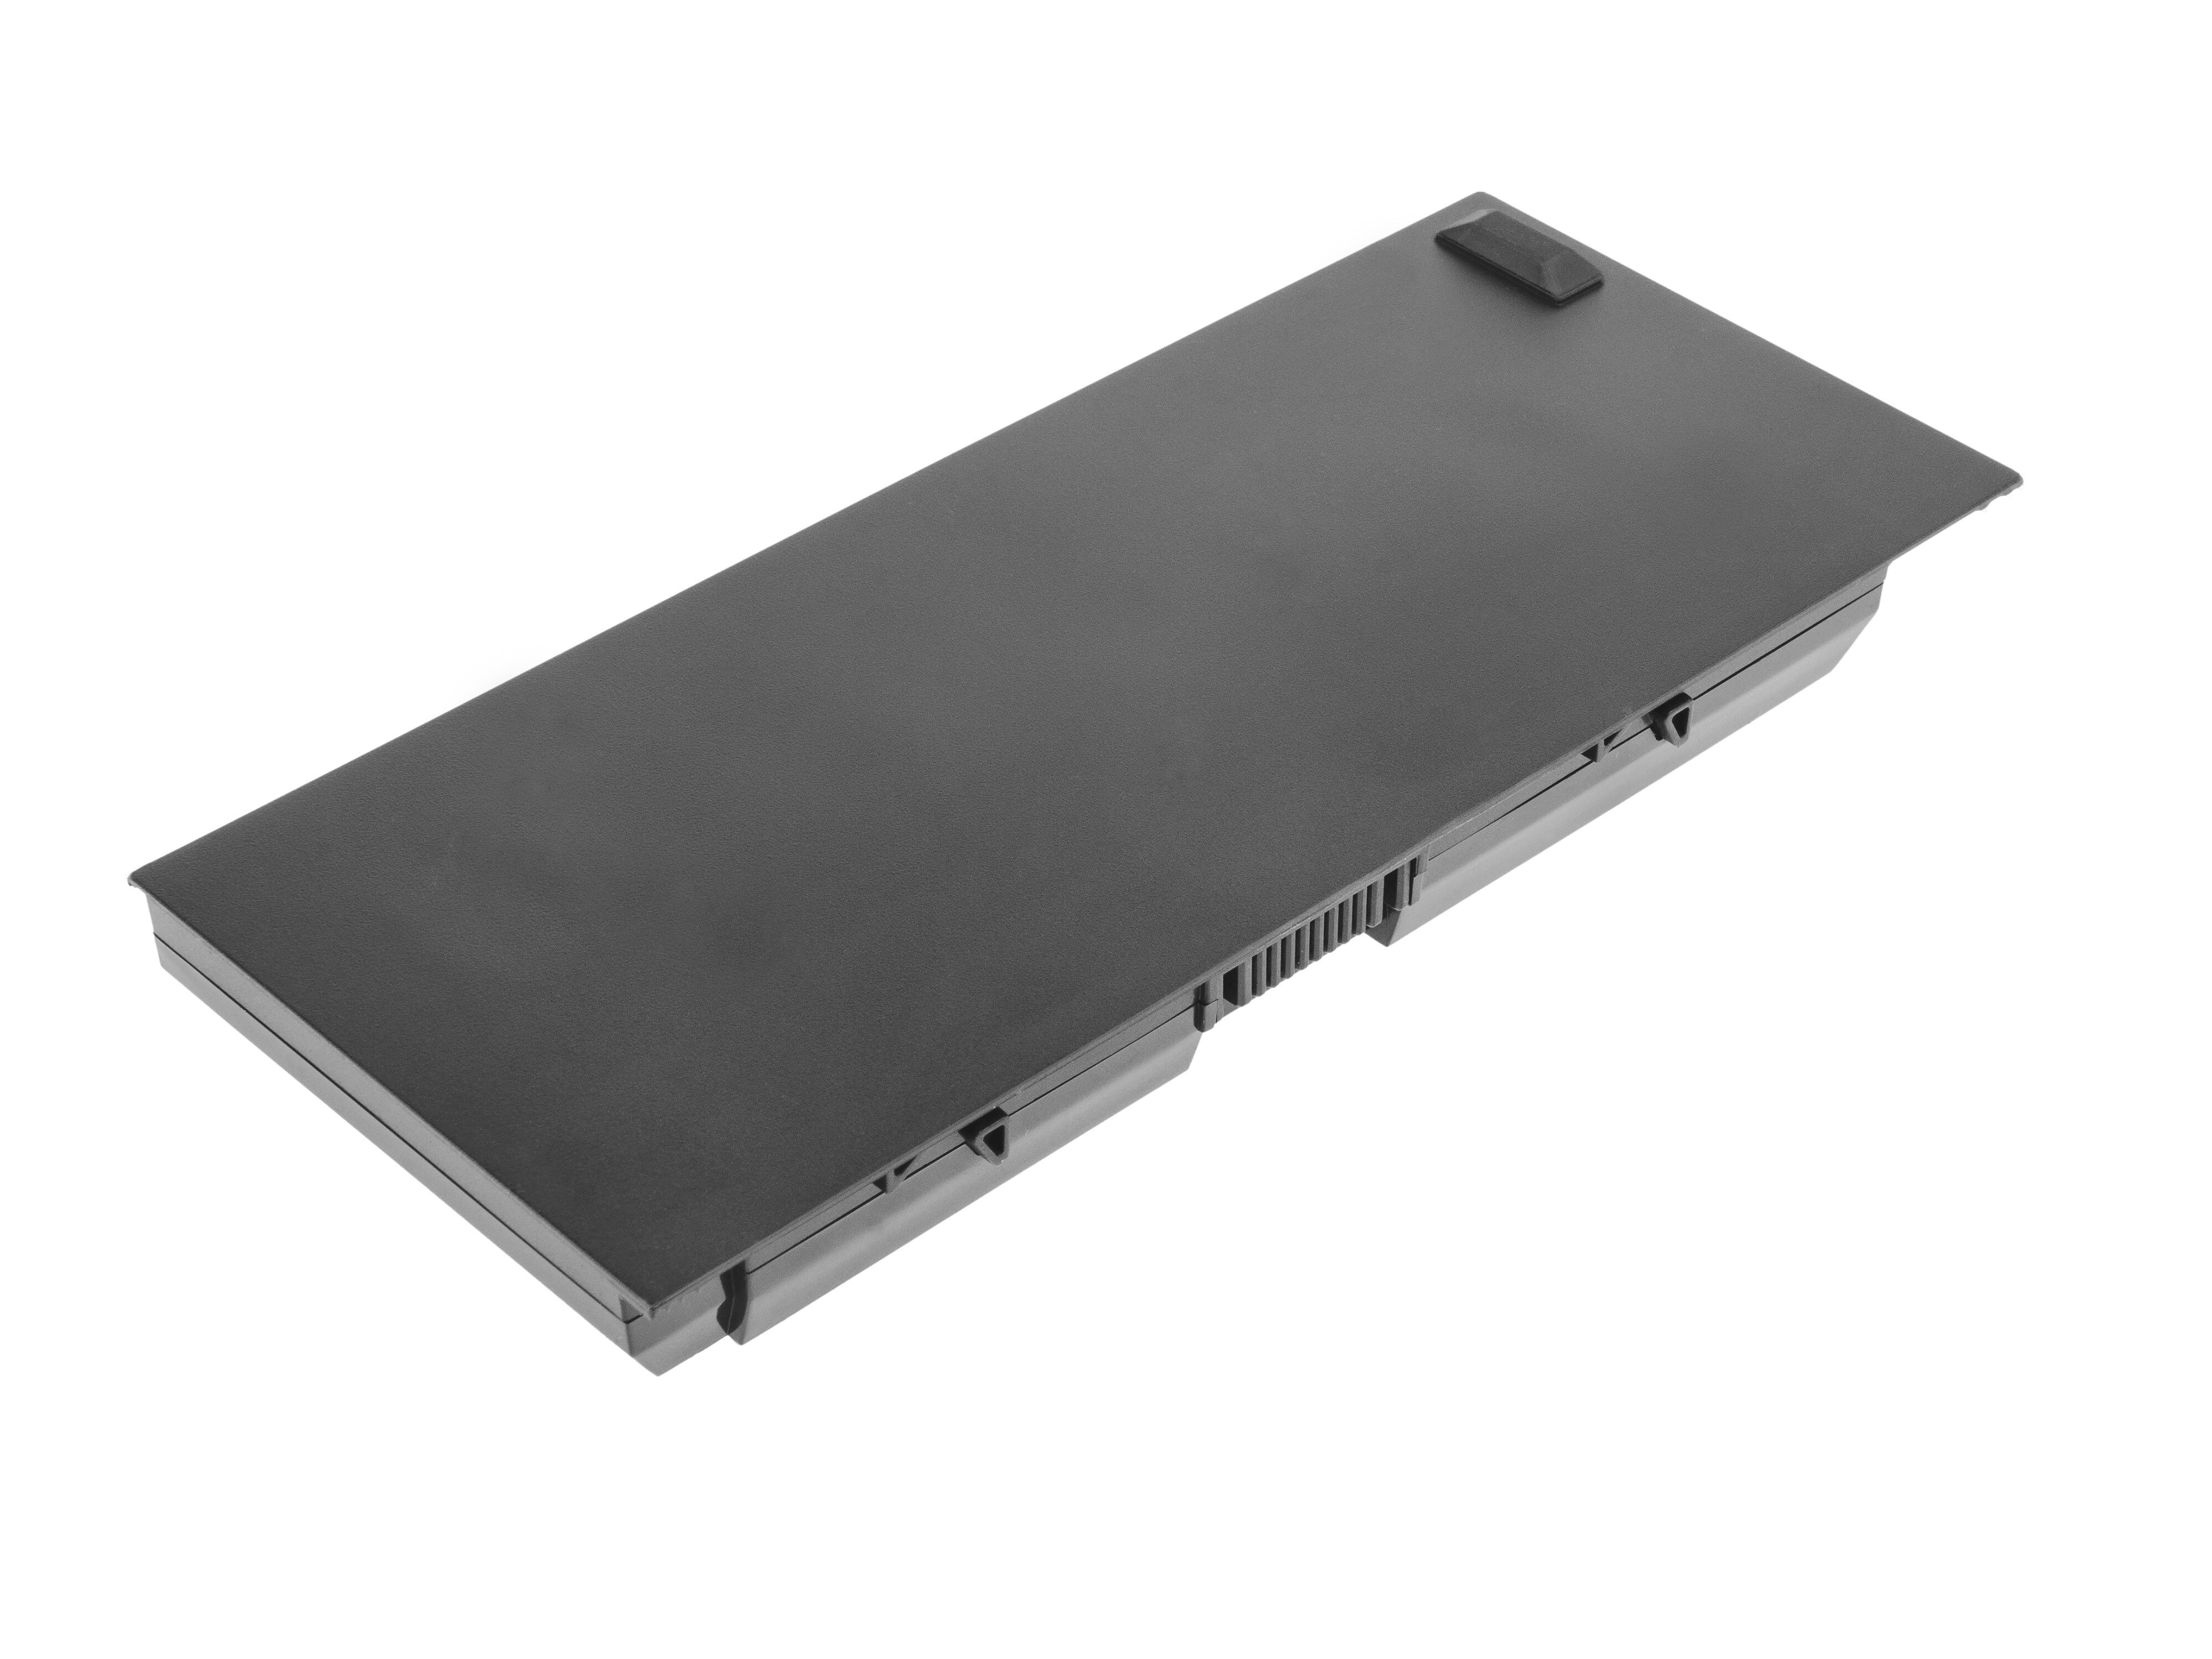 Green Cell PRO laptop batteri til Dell Precision M4600 M4700 M4800